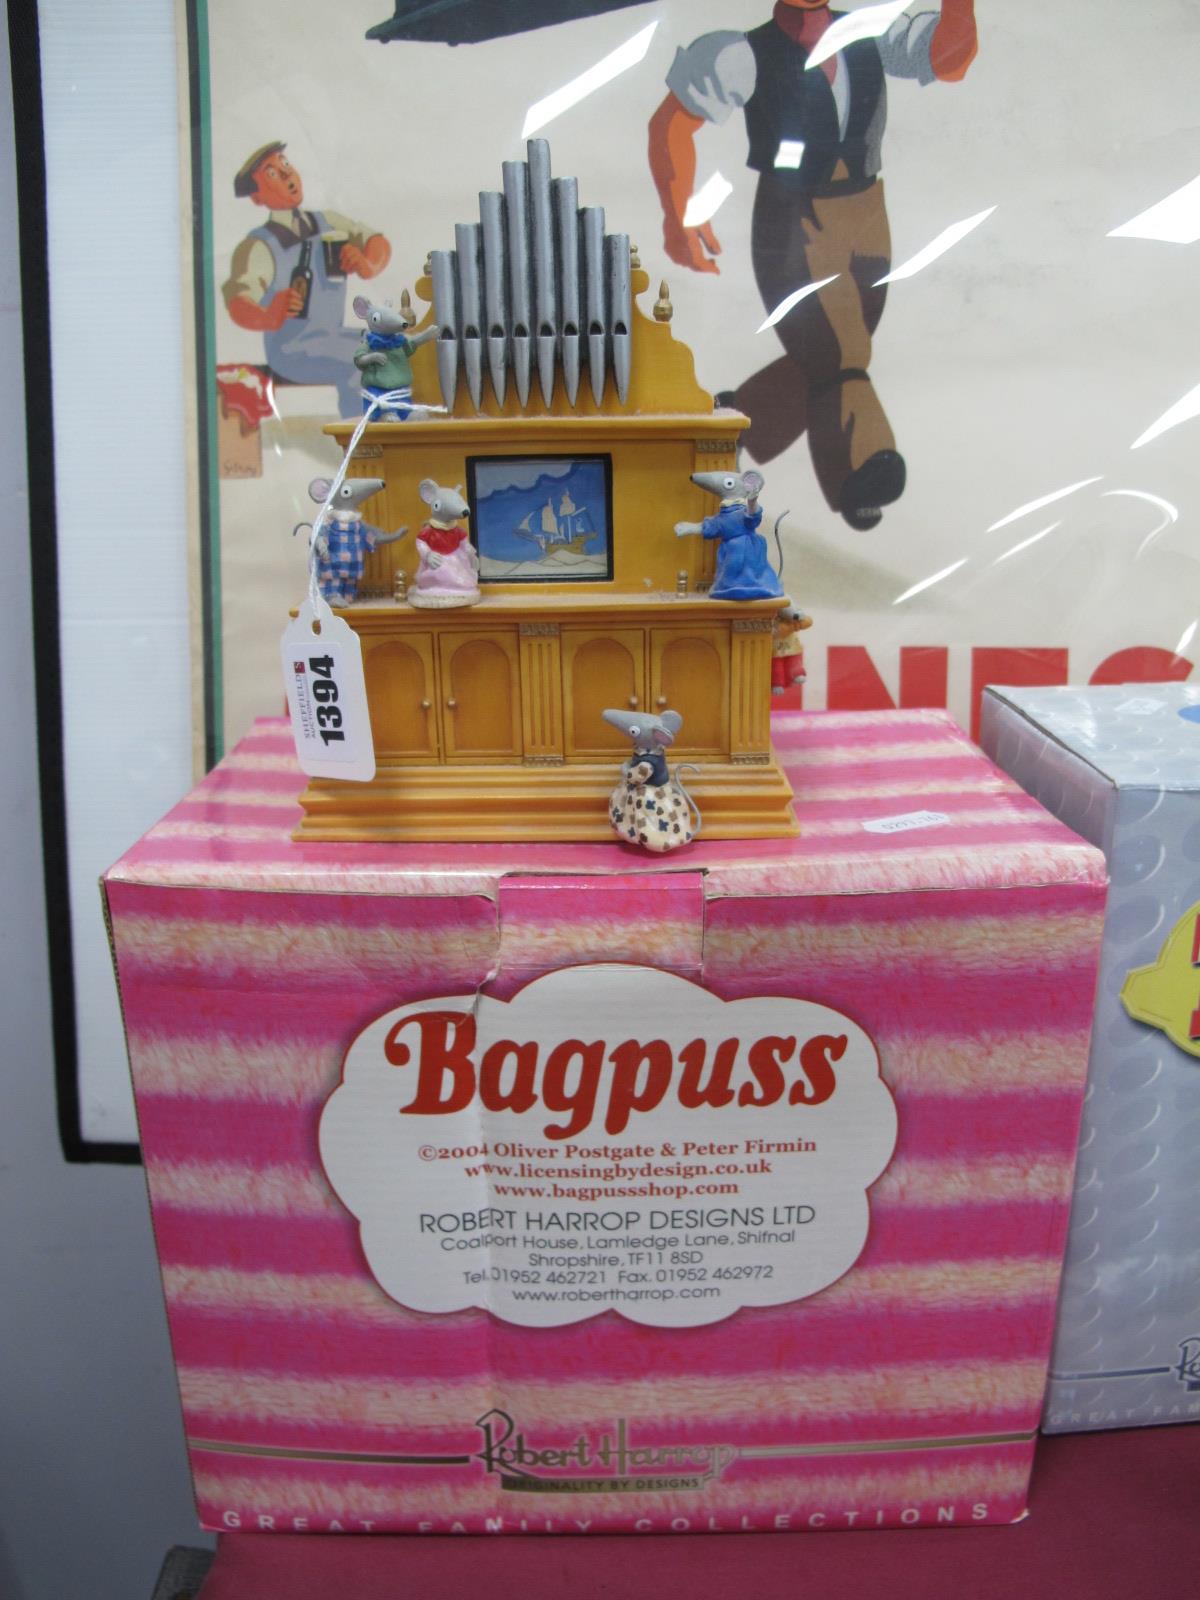 Bugpuss, Robert Harrop, The Marvelous Mechanical Mouse Organ Musical Box, BG05, 2004, with box